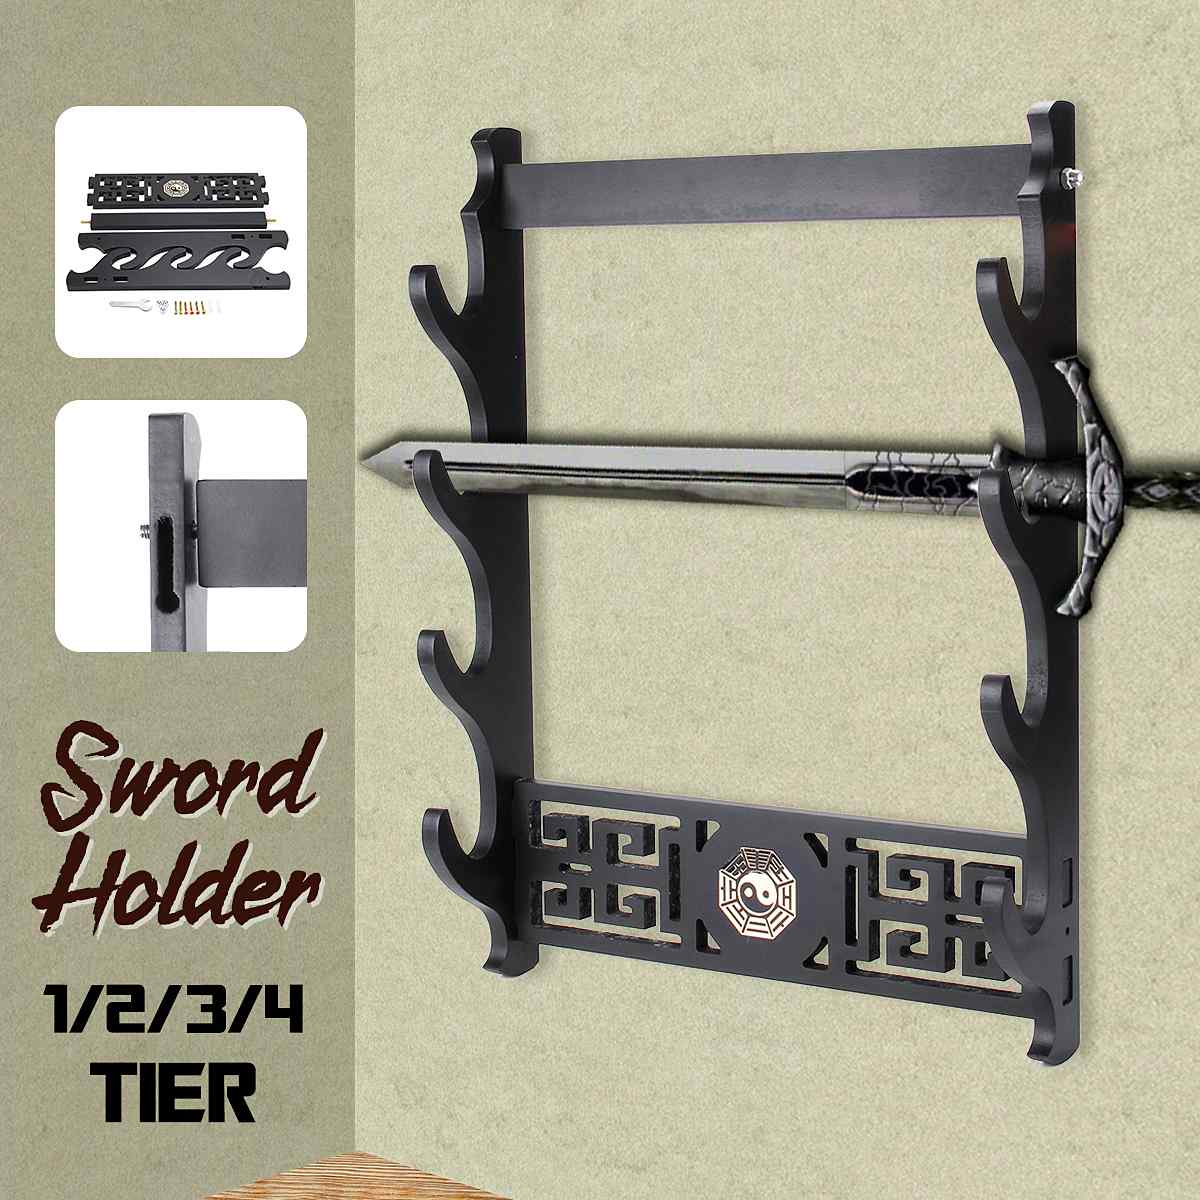 1-6 Tier Sword Holder Wall Mount Samurai Stand Display Katana Wall Hanger Rack 